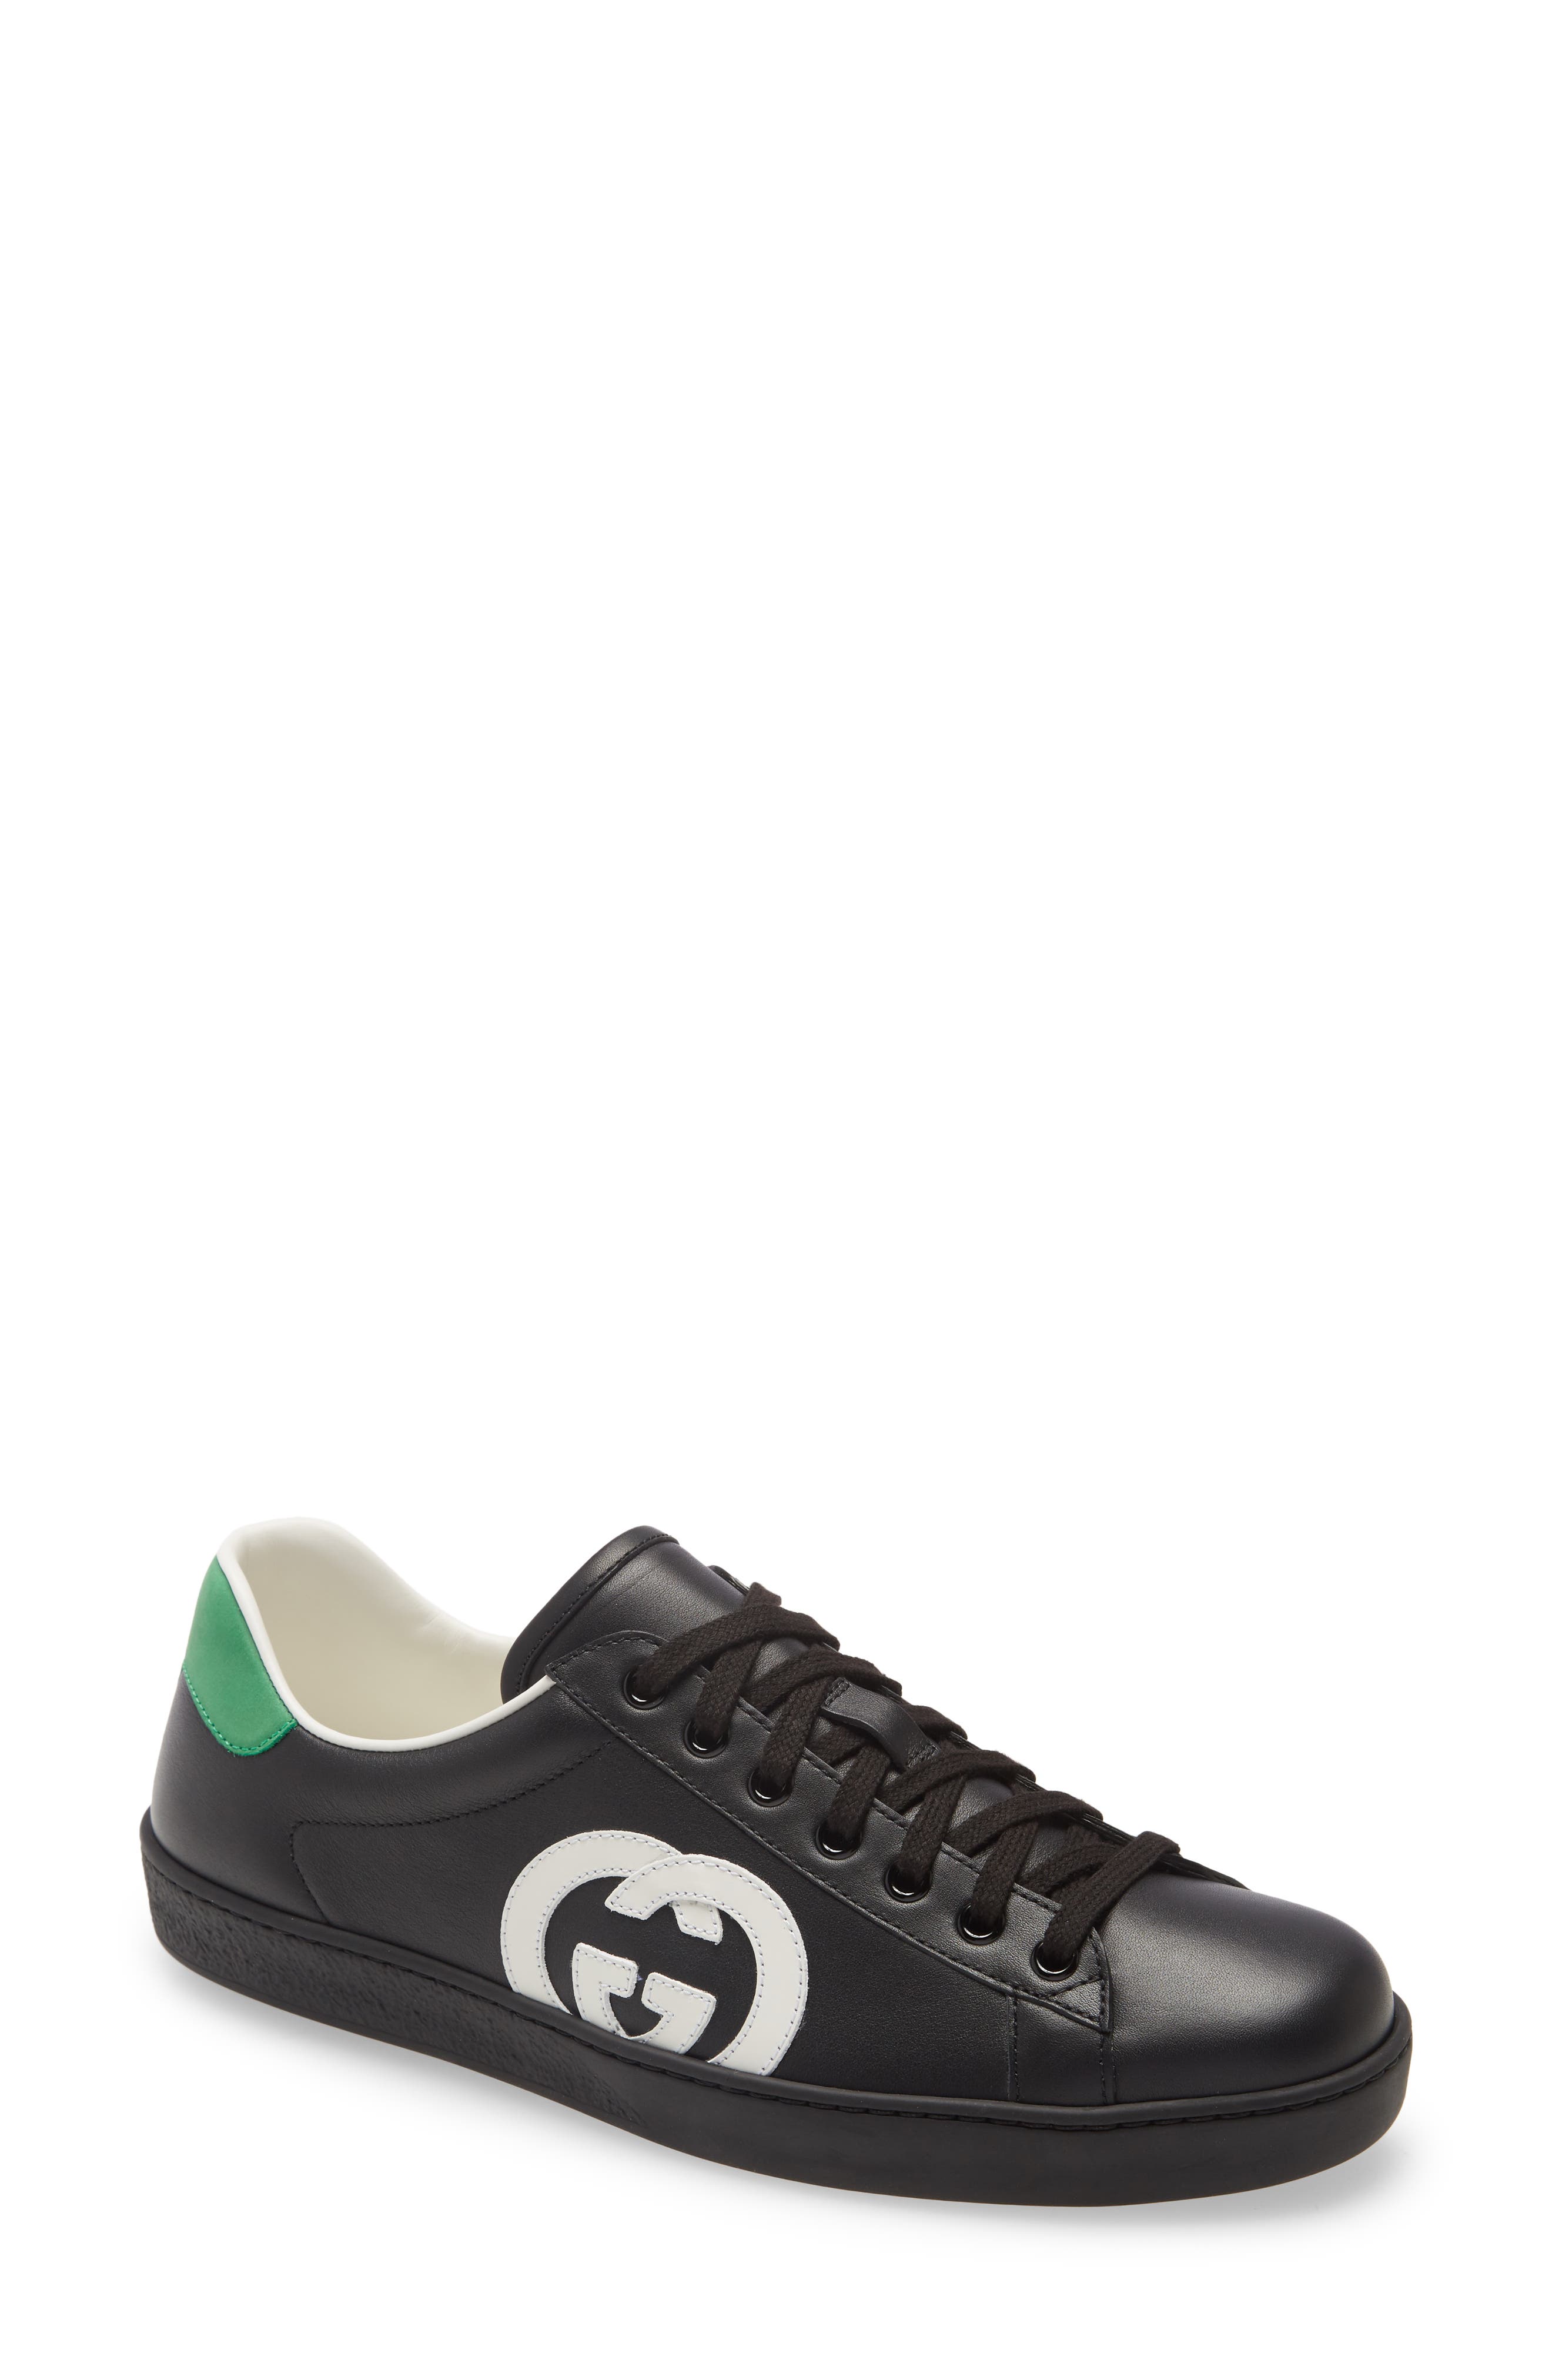 gucci shoes for men 218